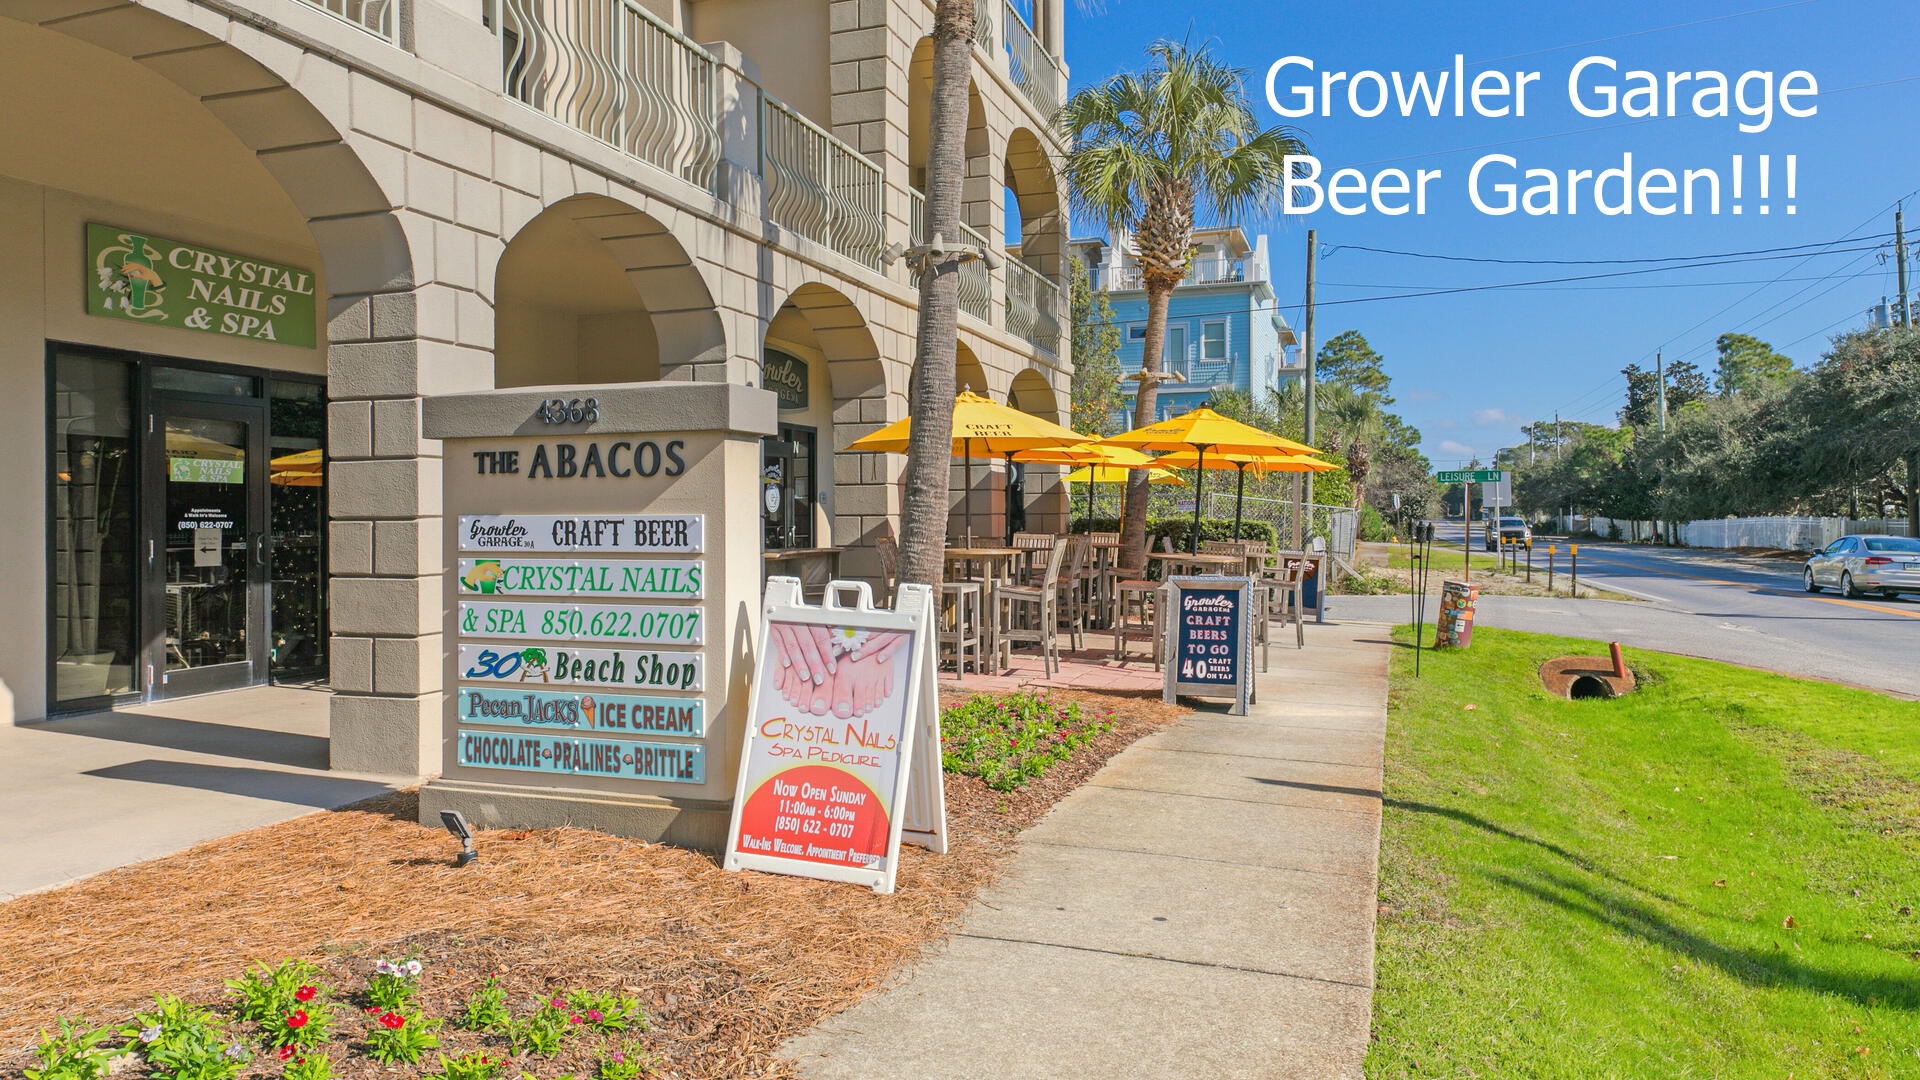 The Growler Garage has over 40 unique beers on tap!